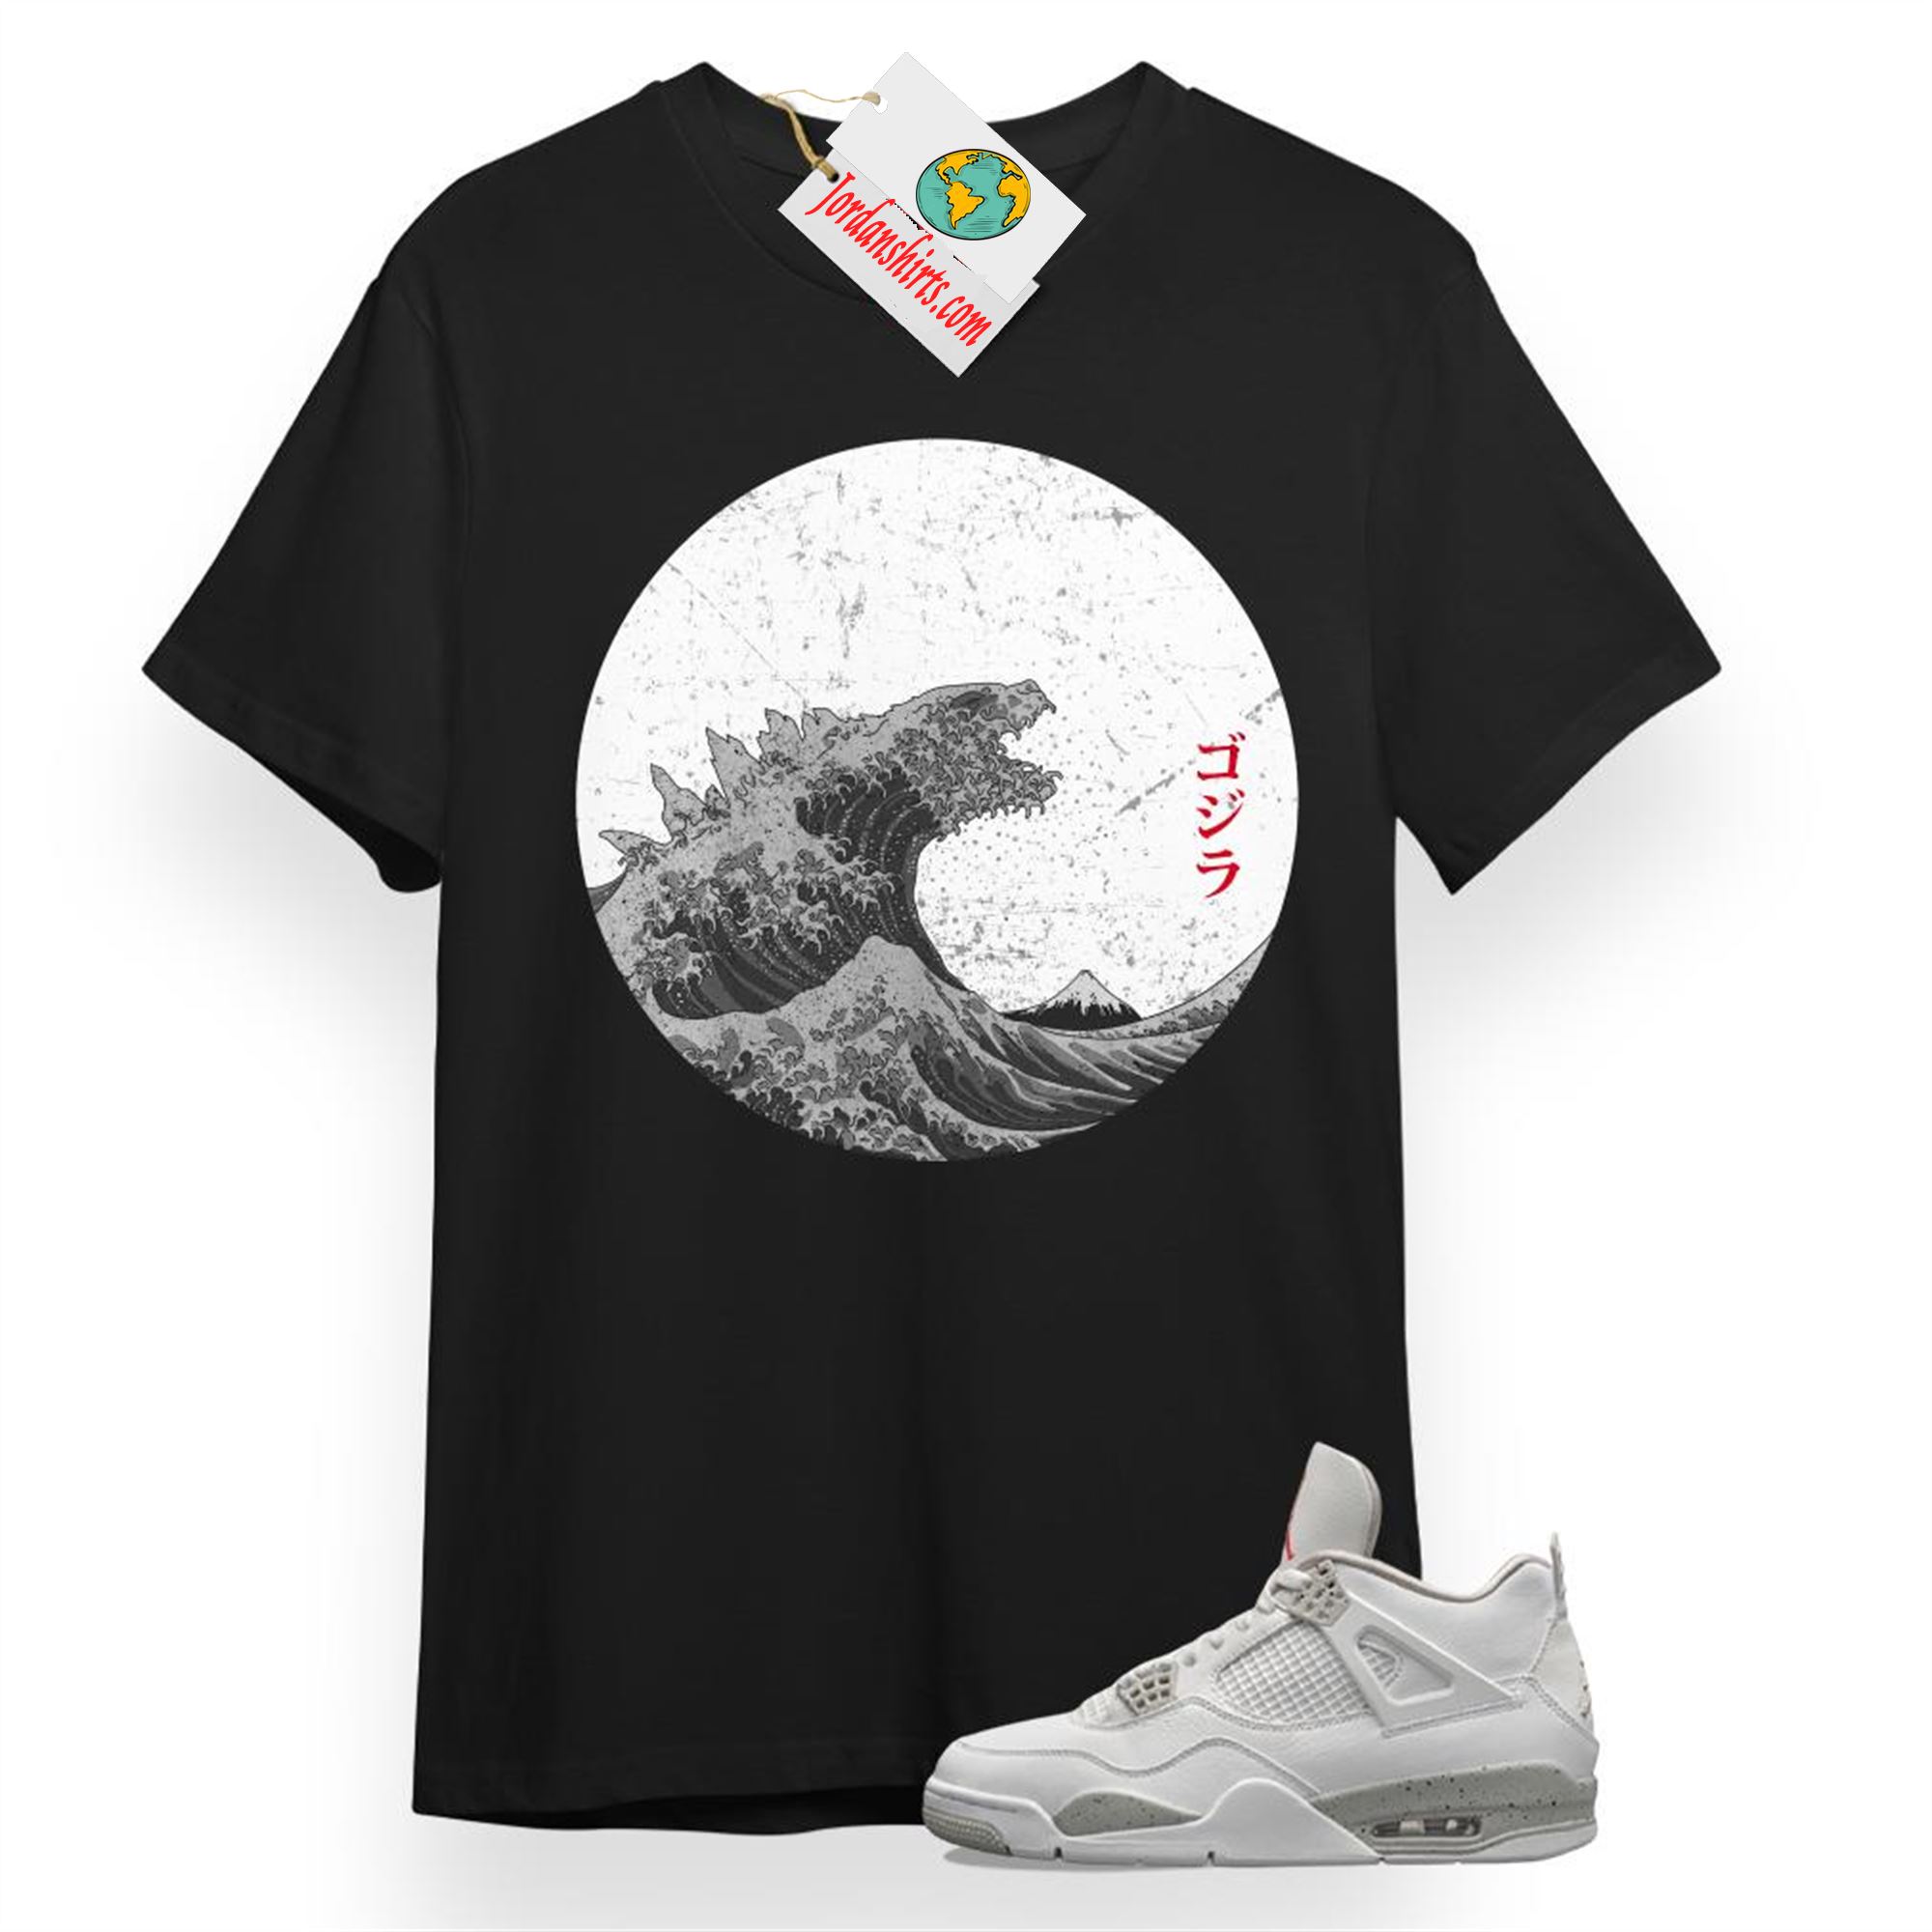 Jordan 4 Shirt, Godzilla Black T-shirt Air Jordan 4 Oreo 4s Size Up To 5xl